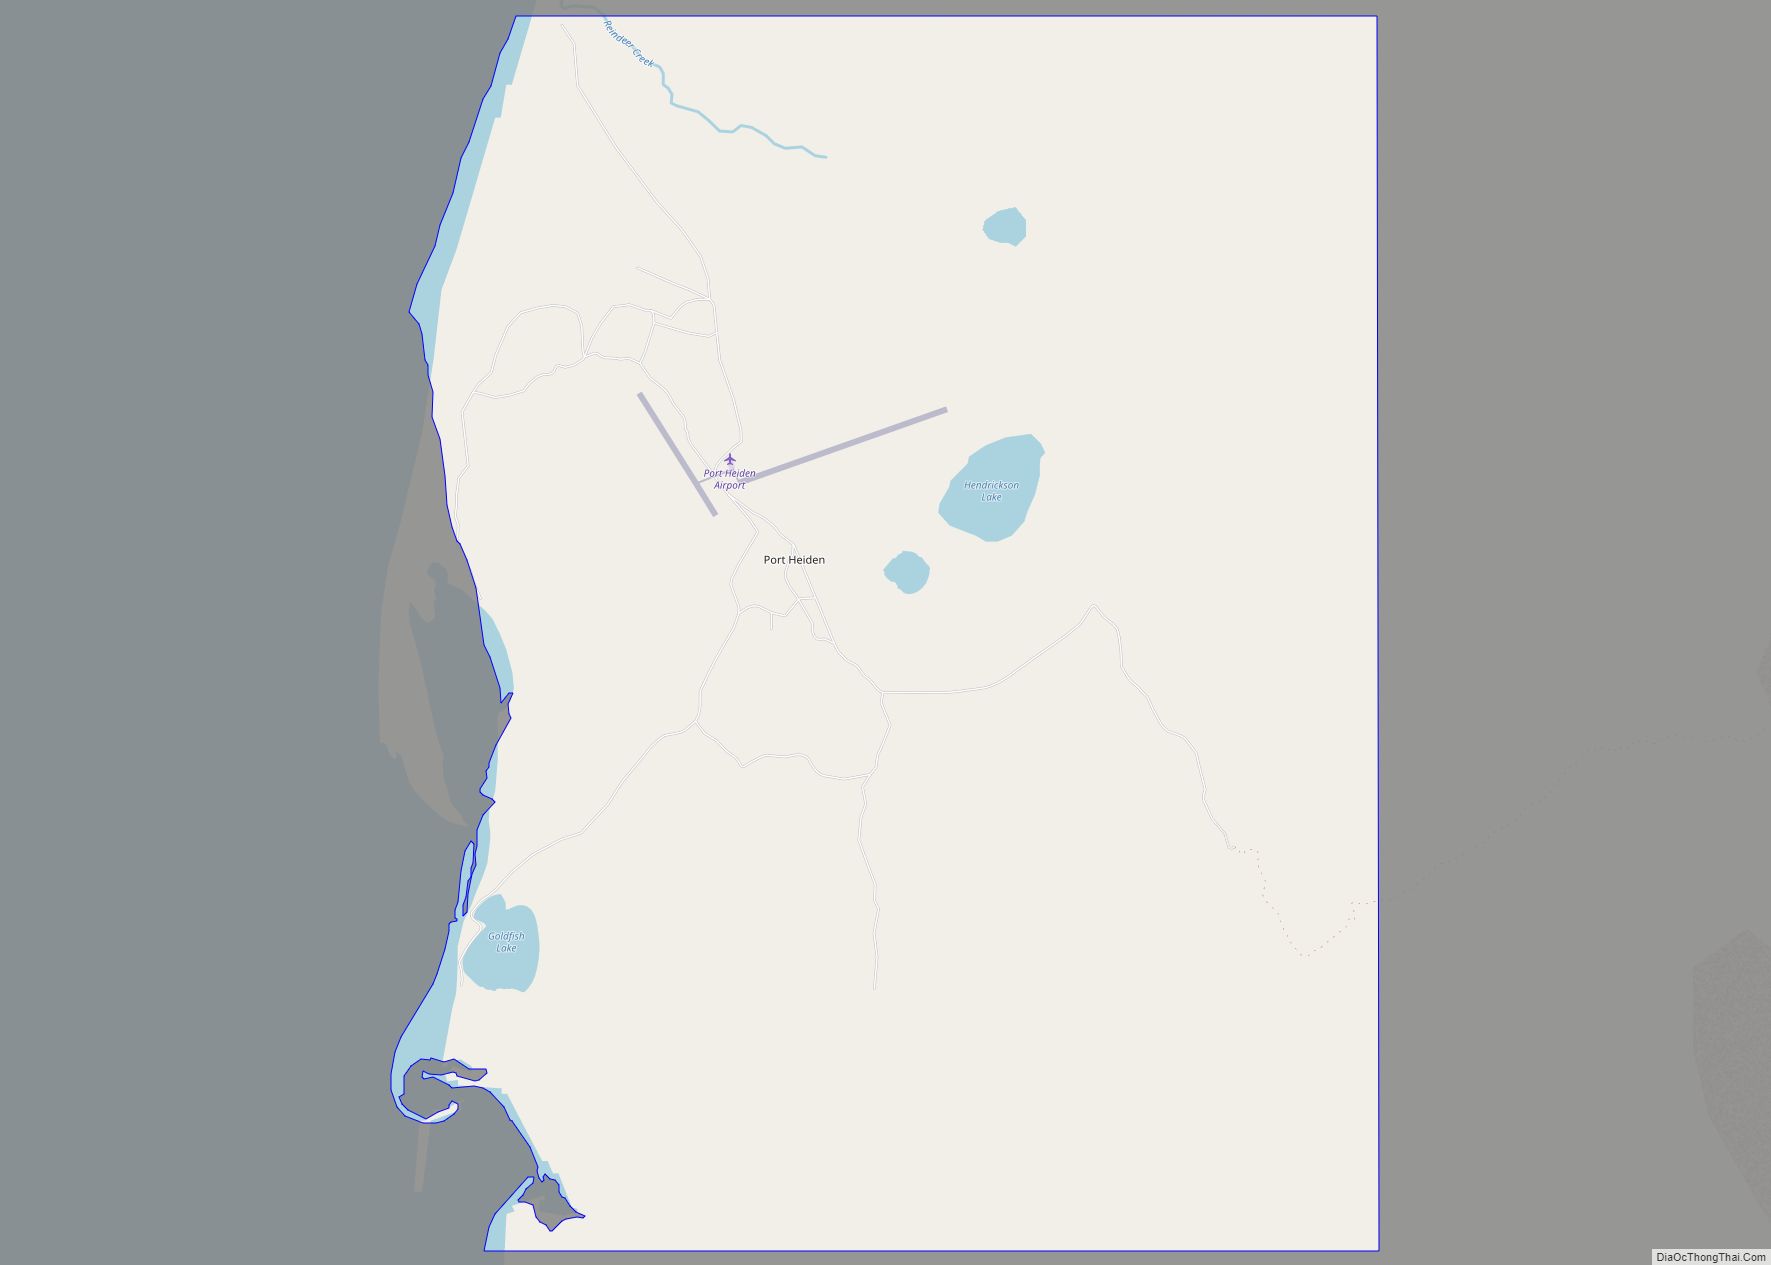 Map of Port Heiden city